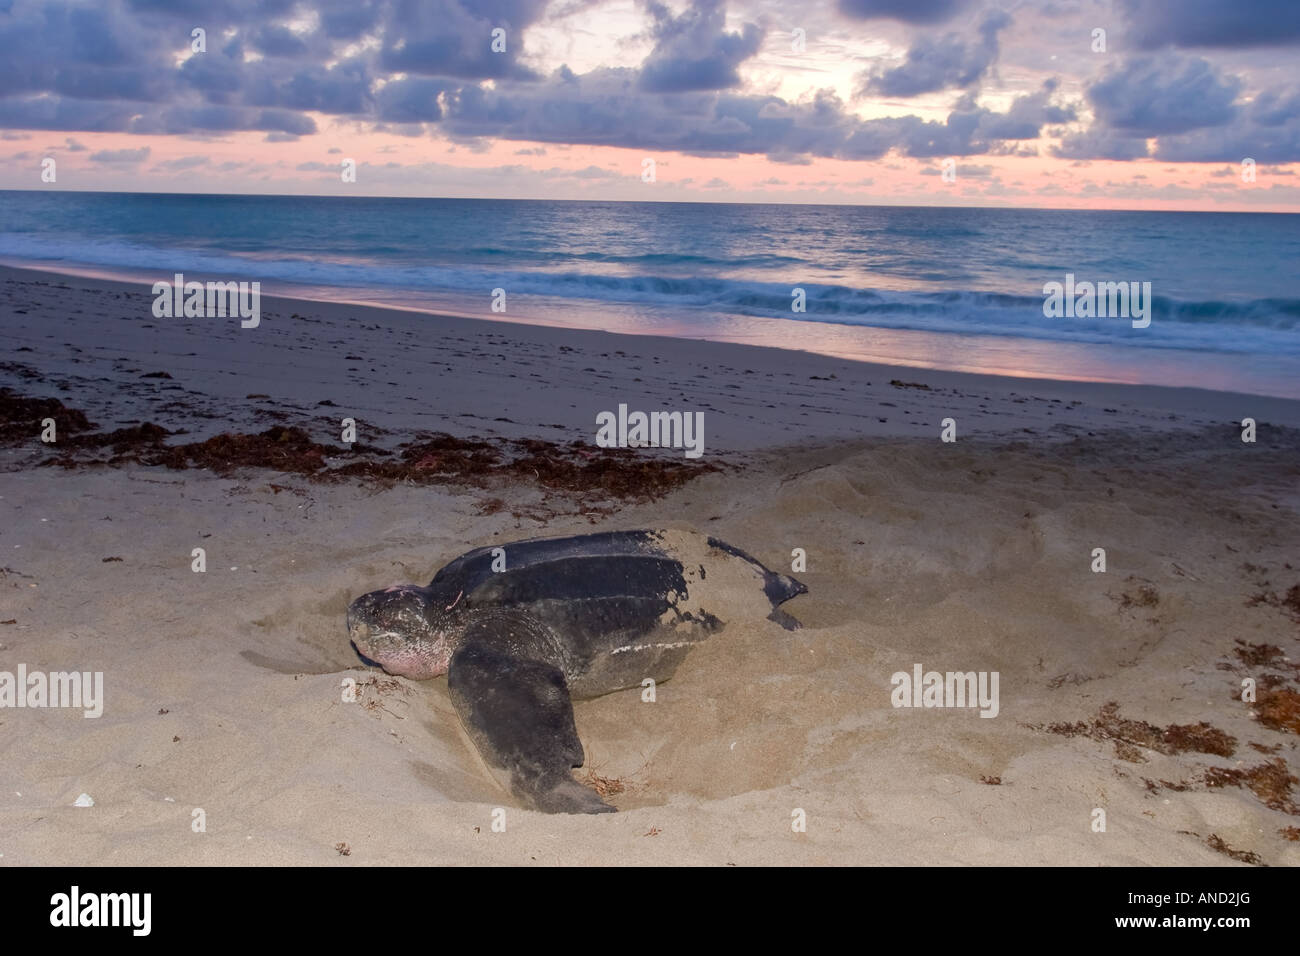 Leatherback sea turtle at dawn Stock Photo